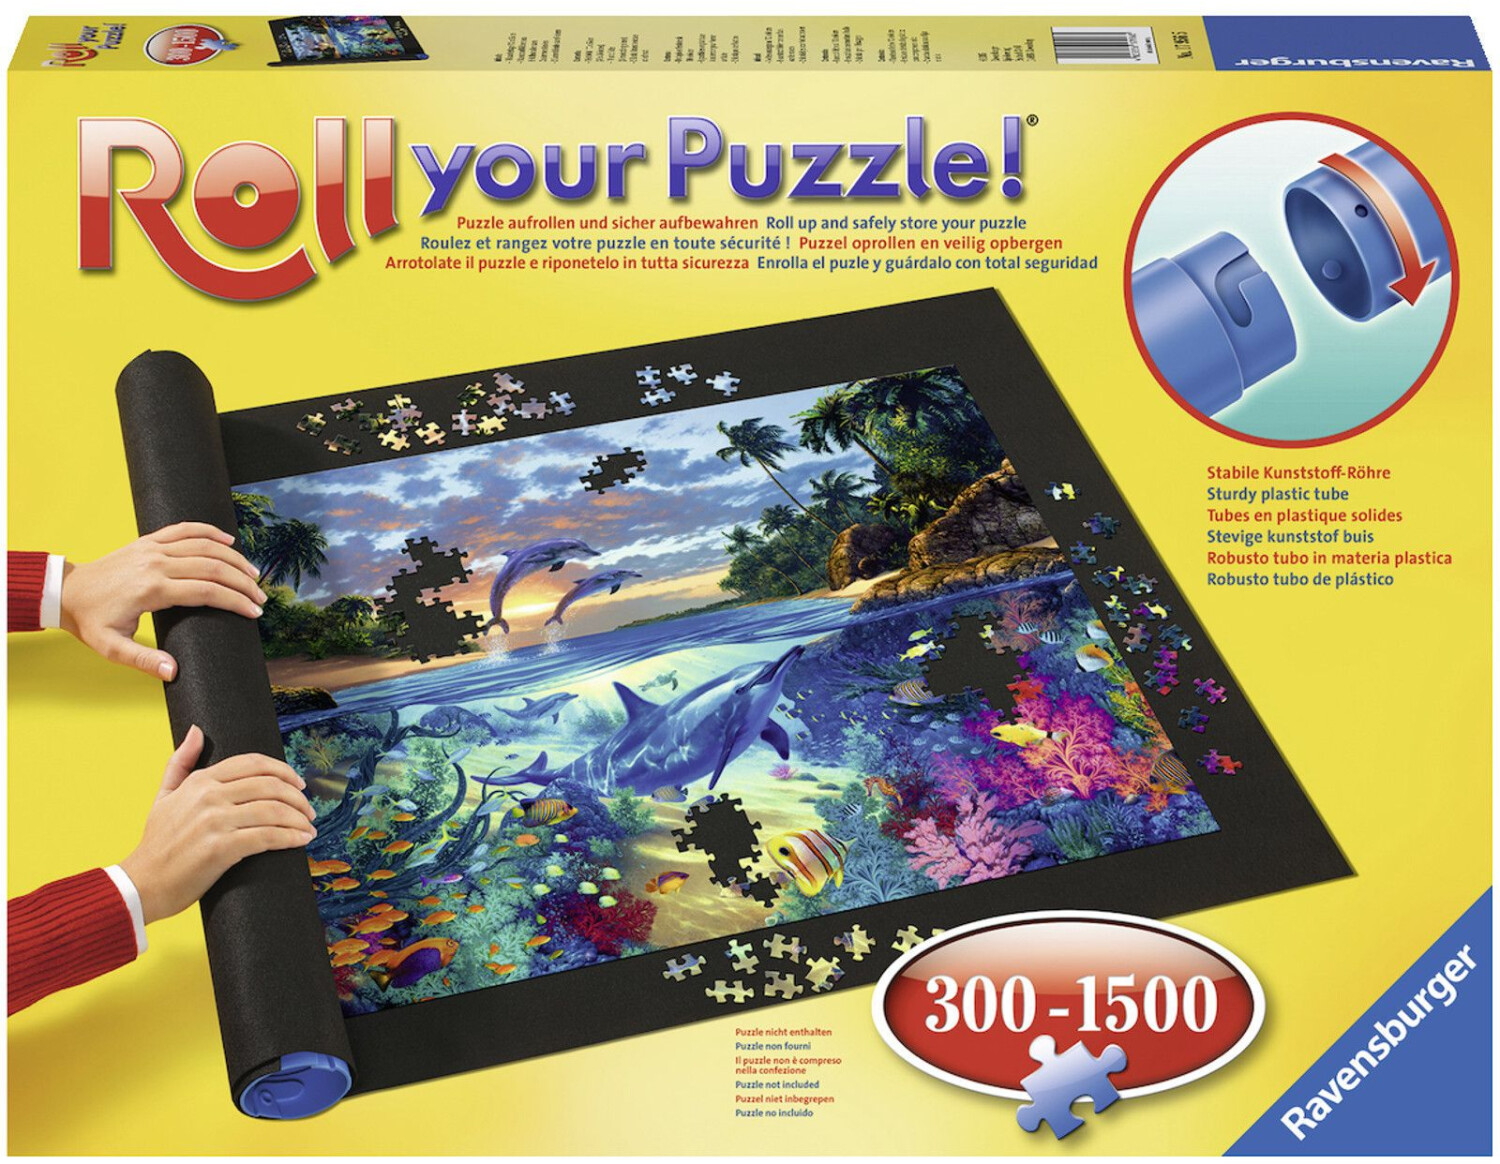 Photos - Jigsaw Puzzle / Mosaic Ravensburger Puzzlepad Roll Your Puzzle  (300 - 1.500 pieces)